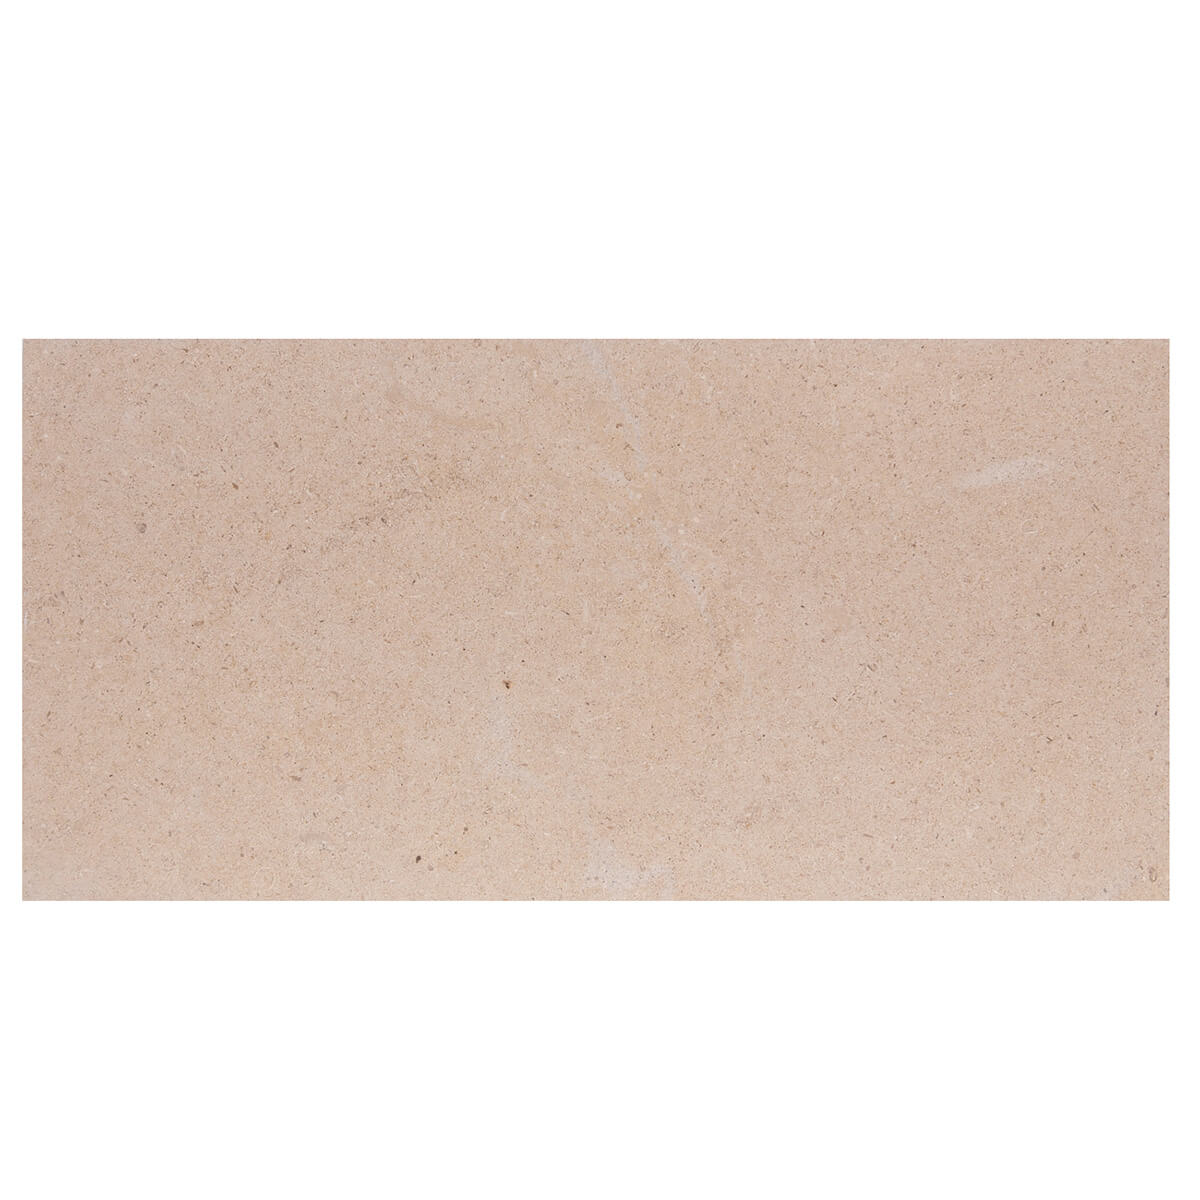 haussmann corton beige limestone rectangle natural stone field tile 12x24 dalle rustique